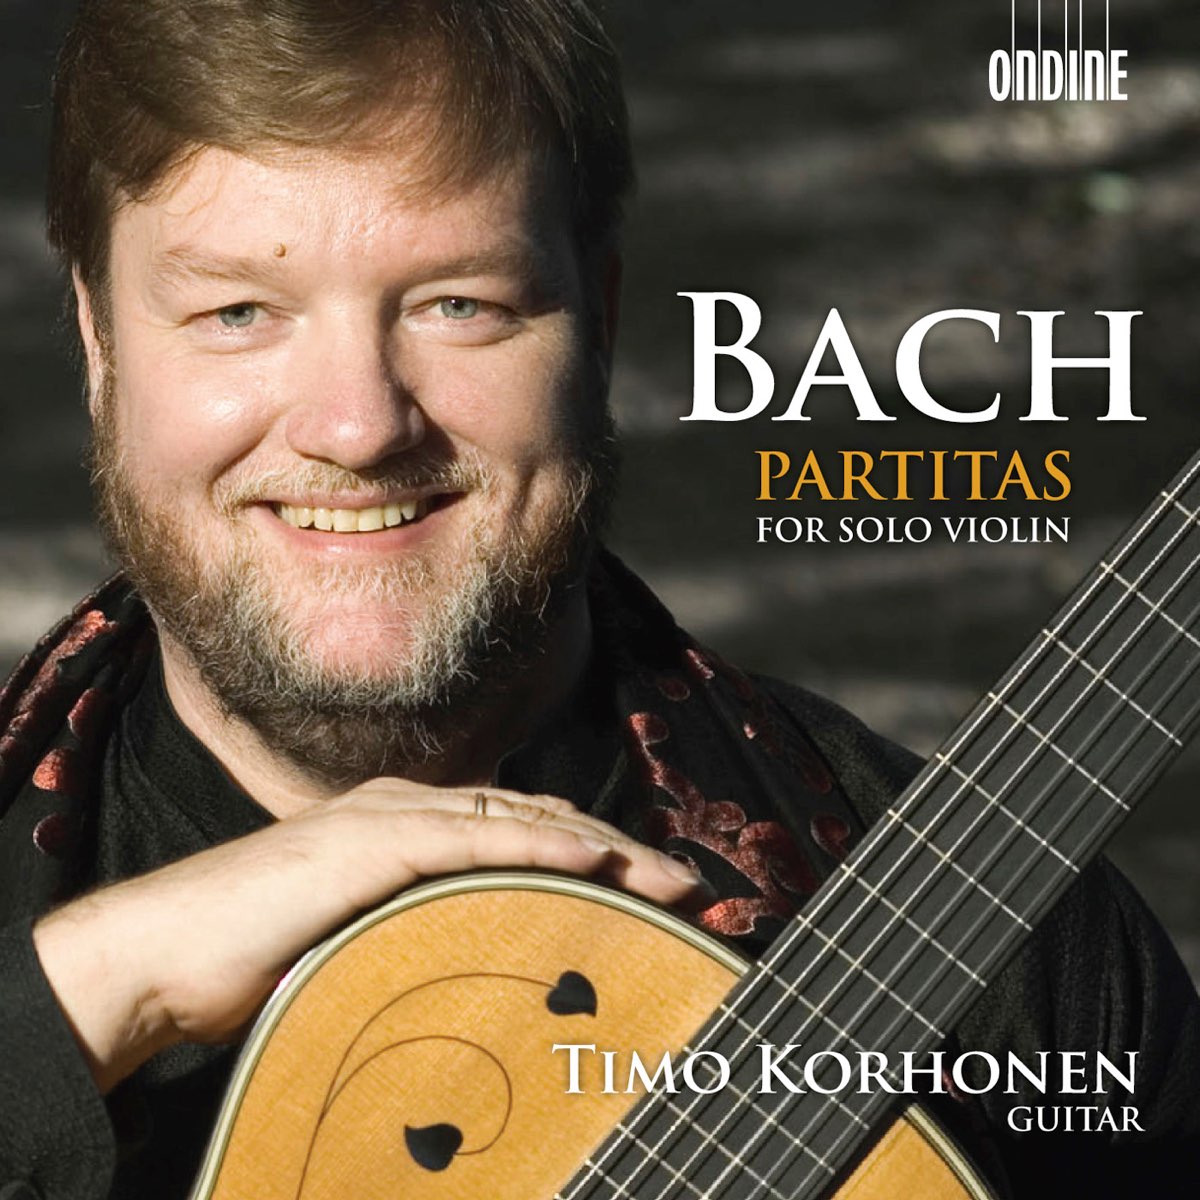 Bach: Partitas Solo Violin by Timo Korhonen on Apple Music